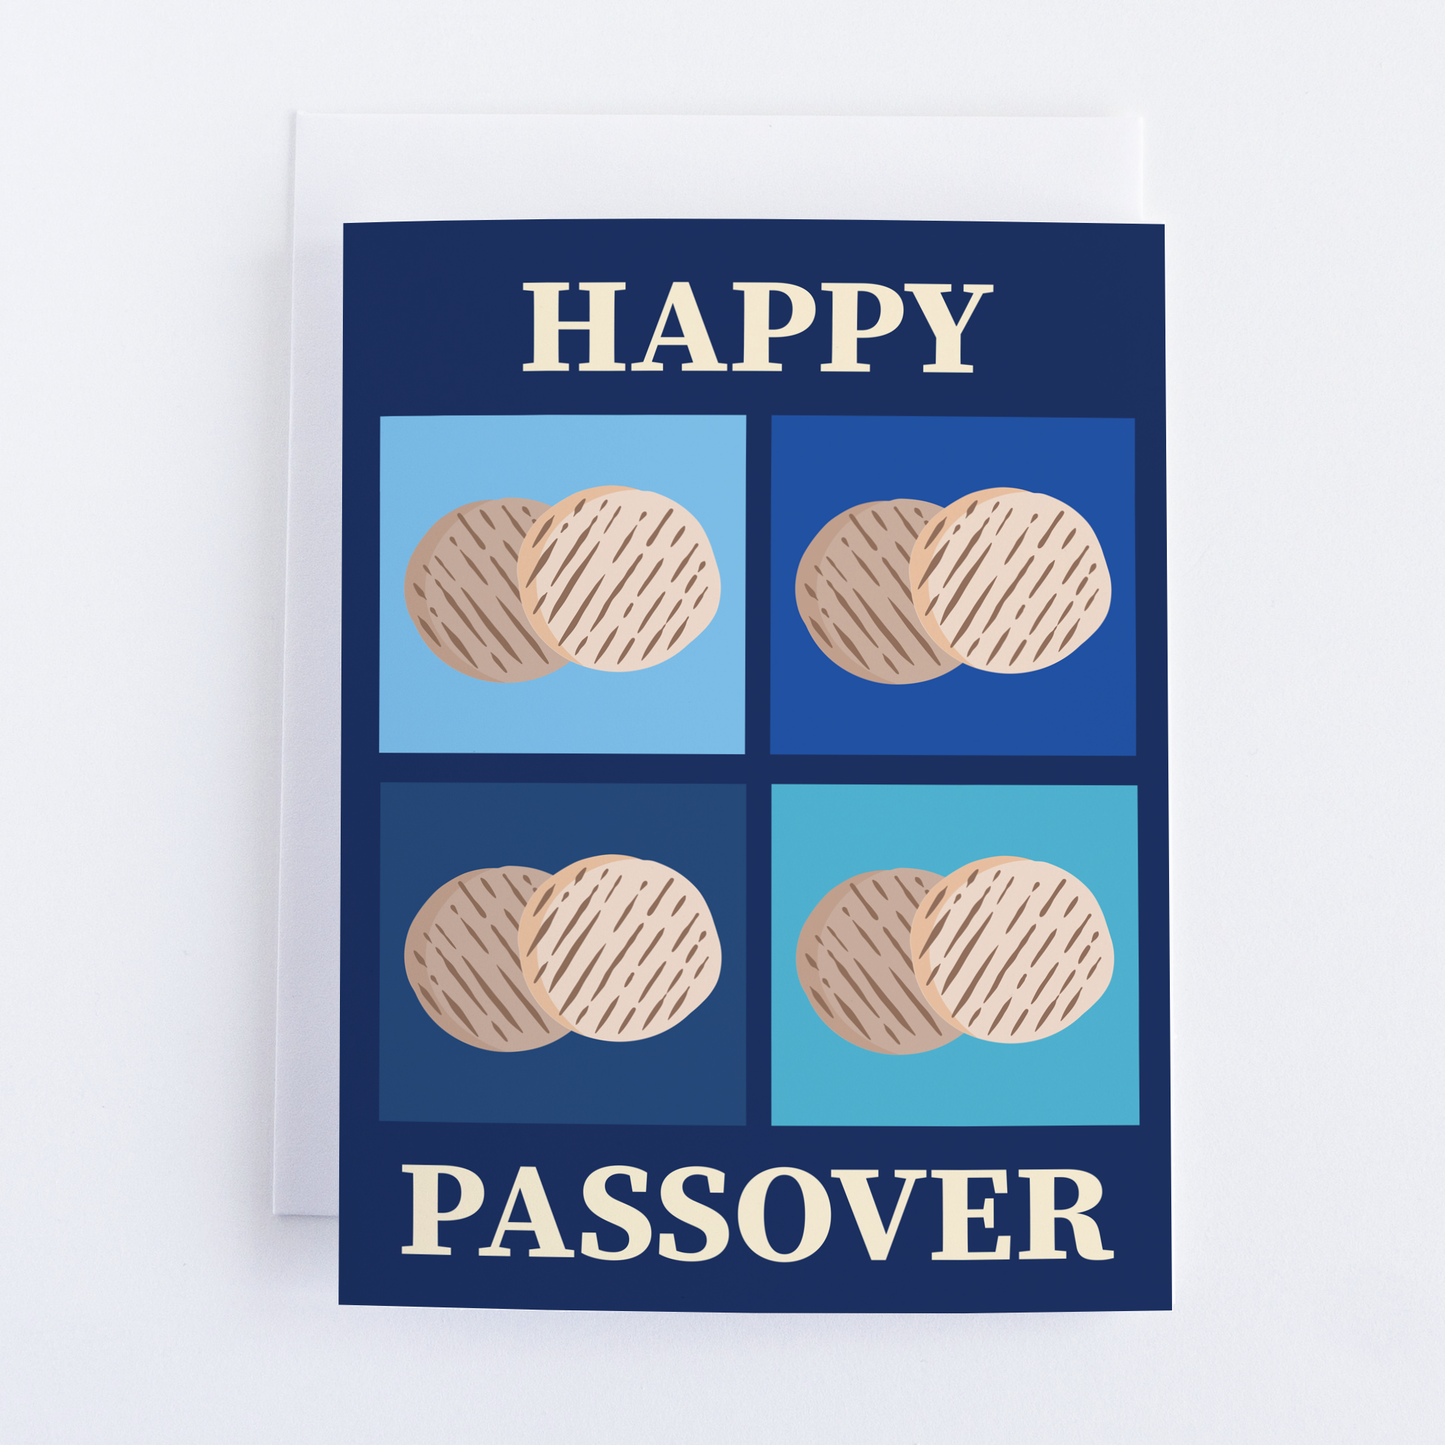 Happy Passover Matzo Matzah - Greeting Card For Passover.